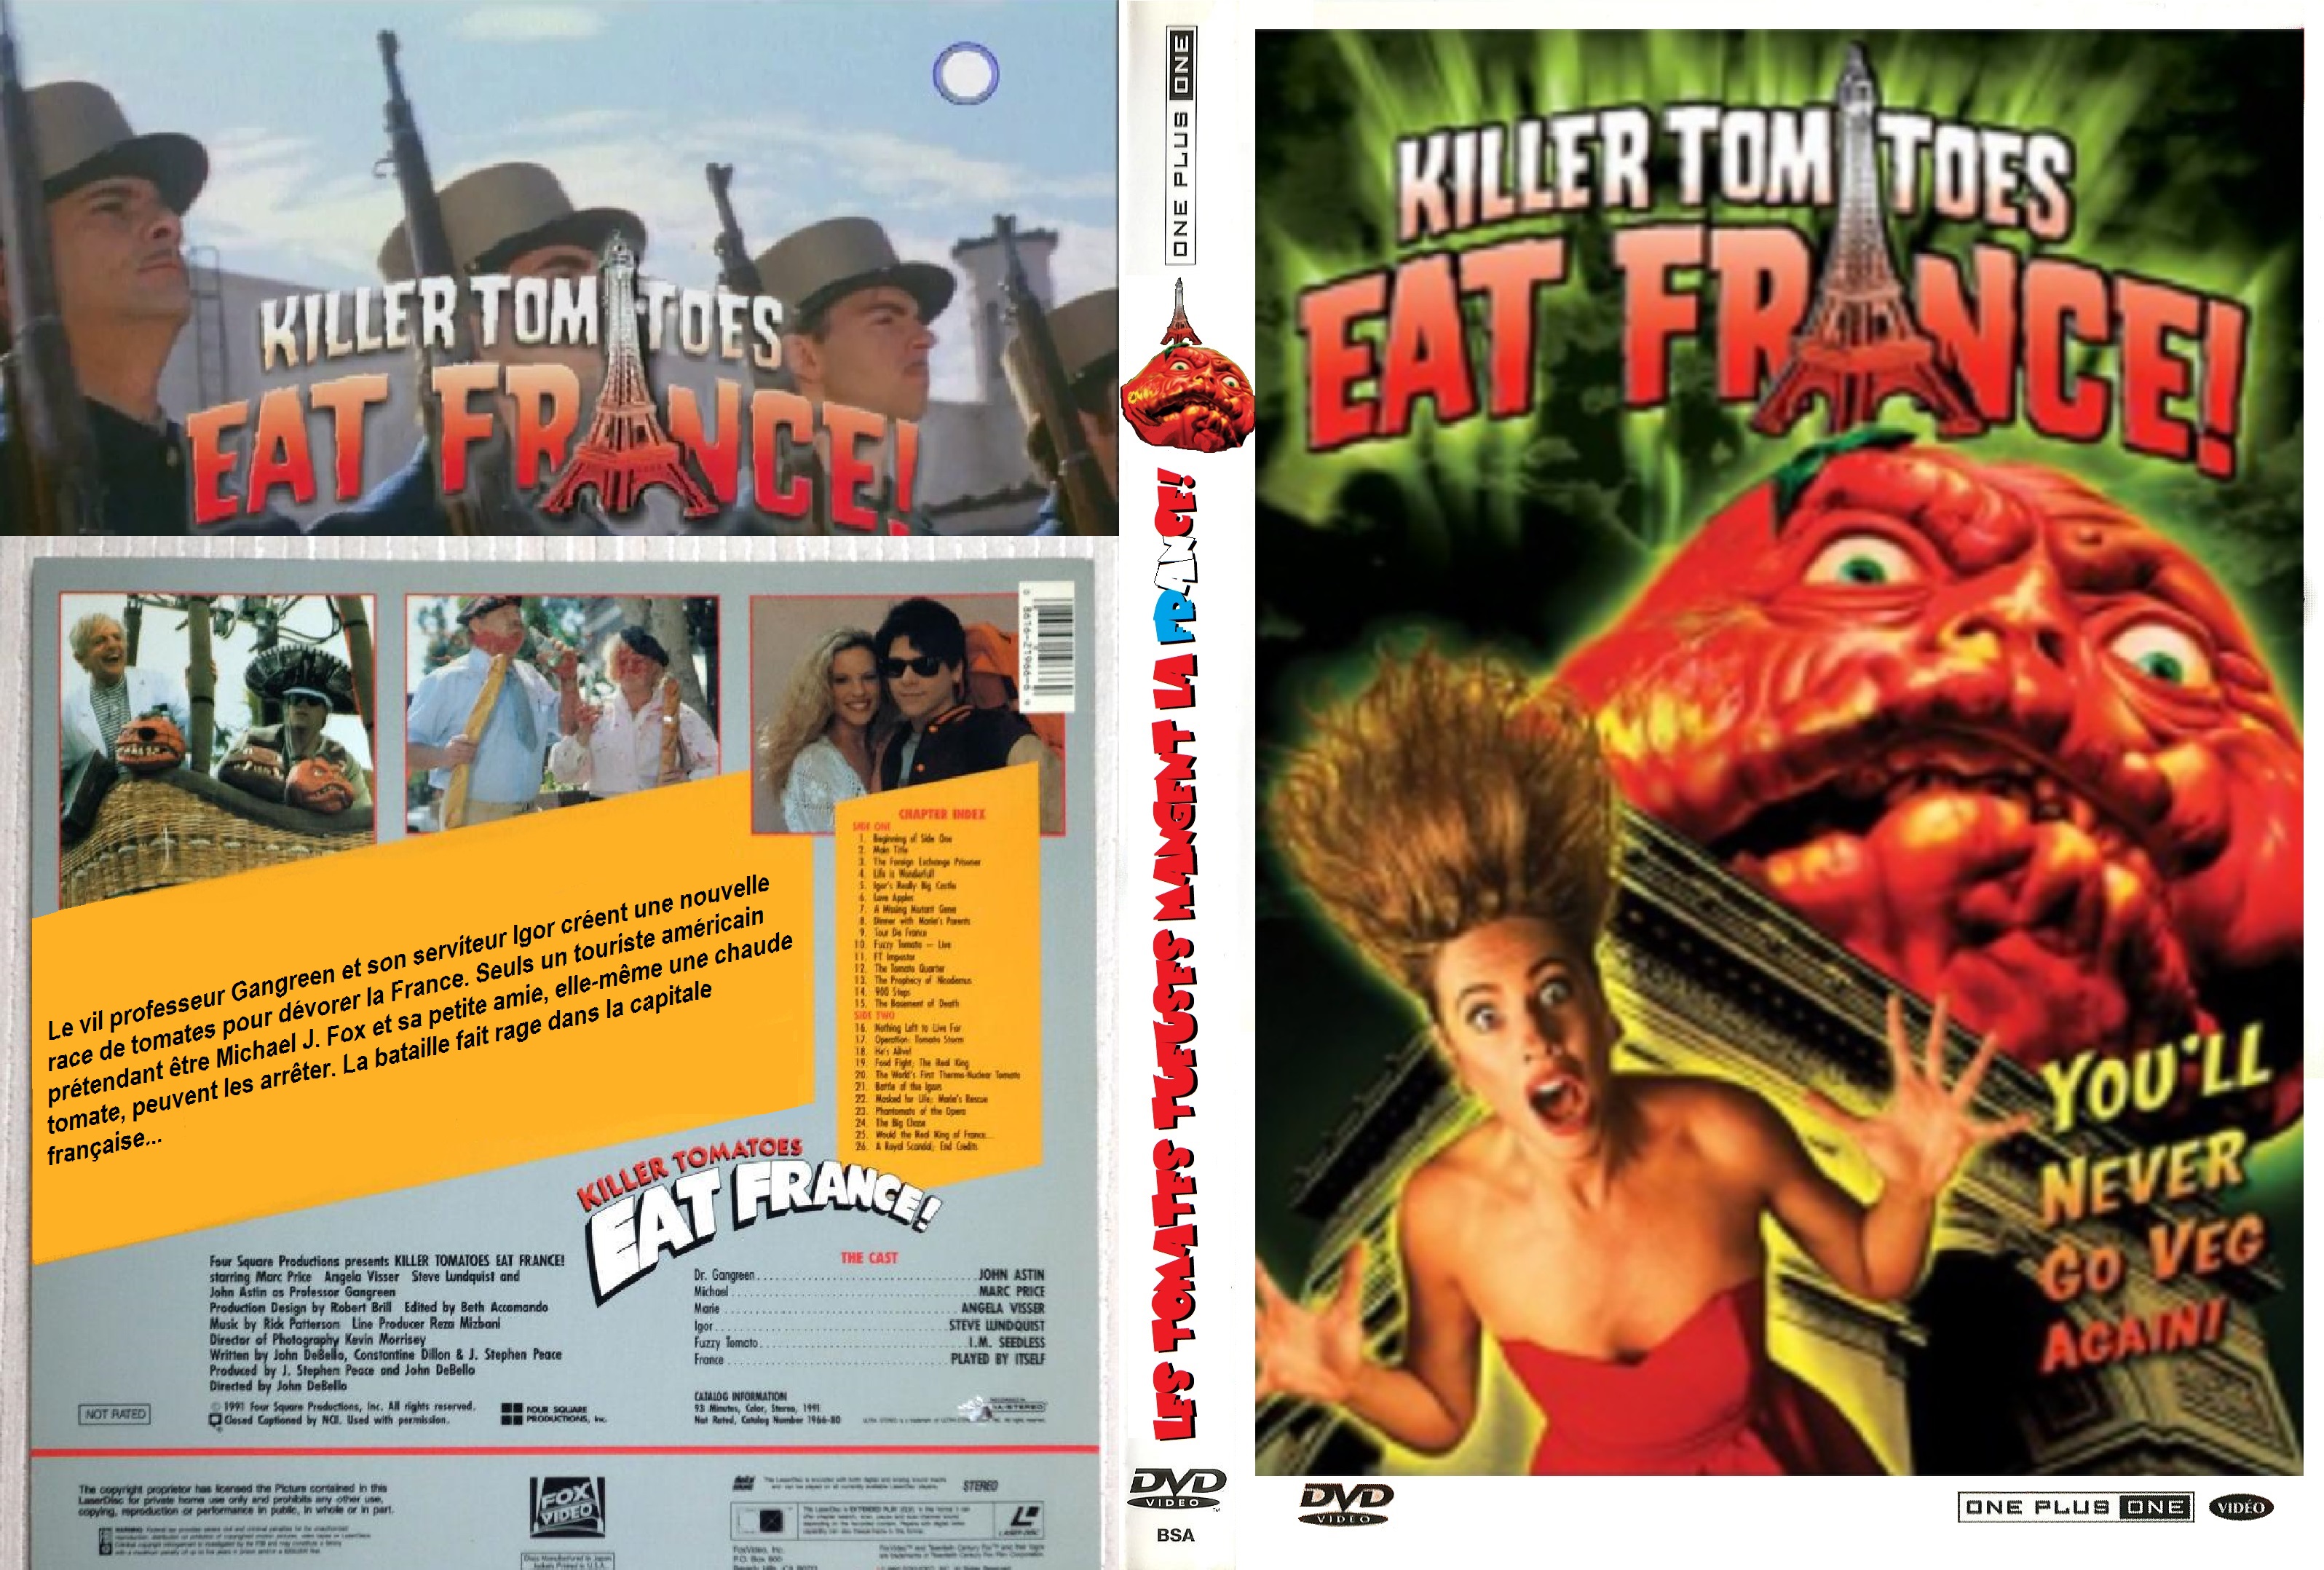 Jaquette DVD Les tomates tueuses mangent la France! custom